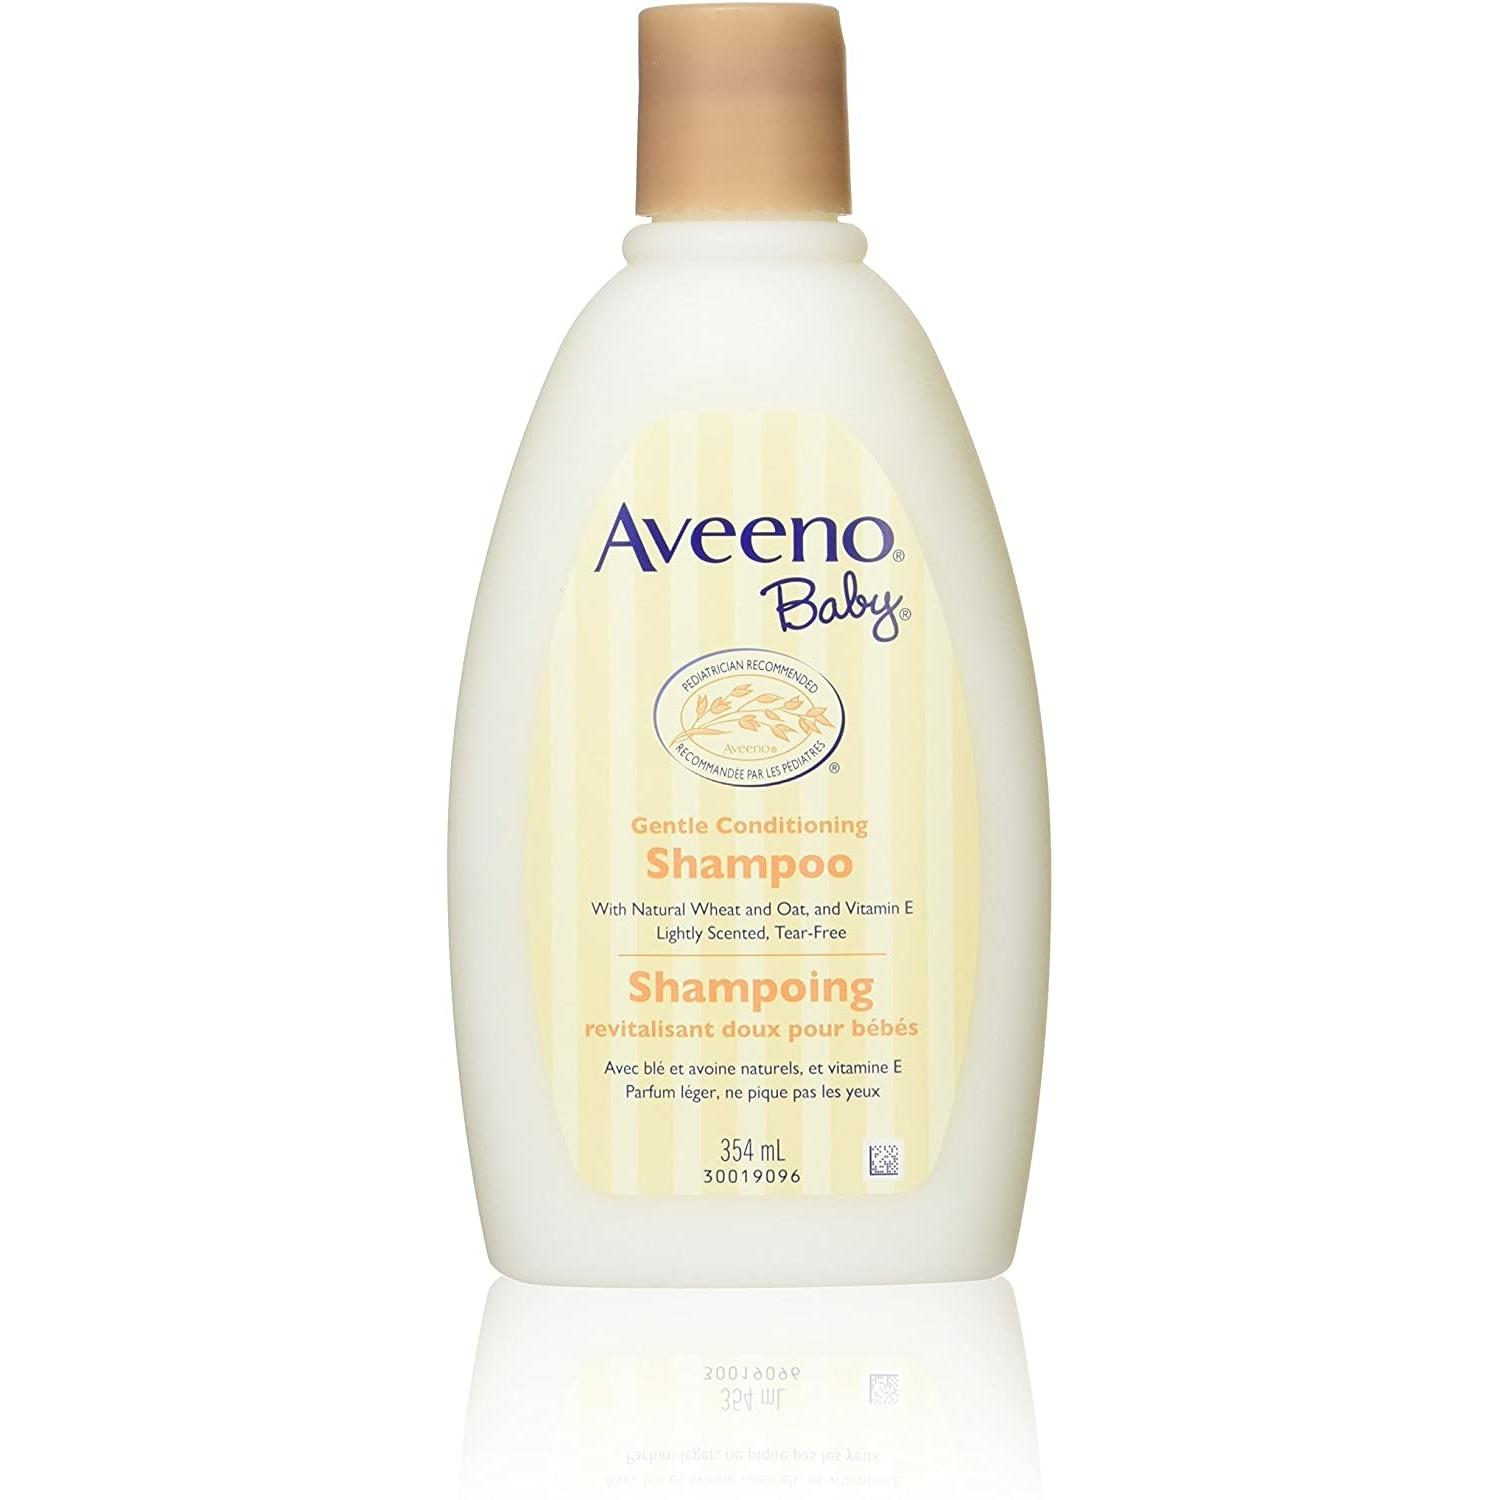 AVEENO® BABY Gentle Conditioning Shampoo